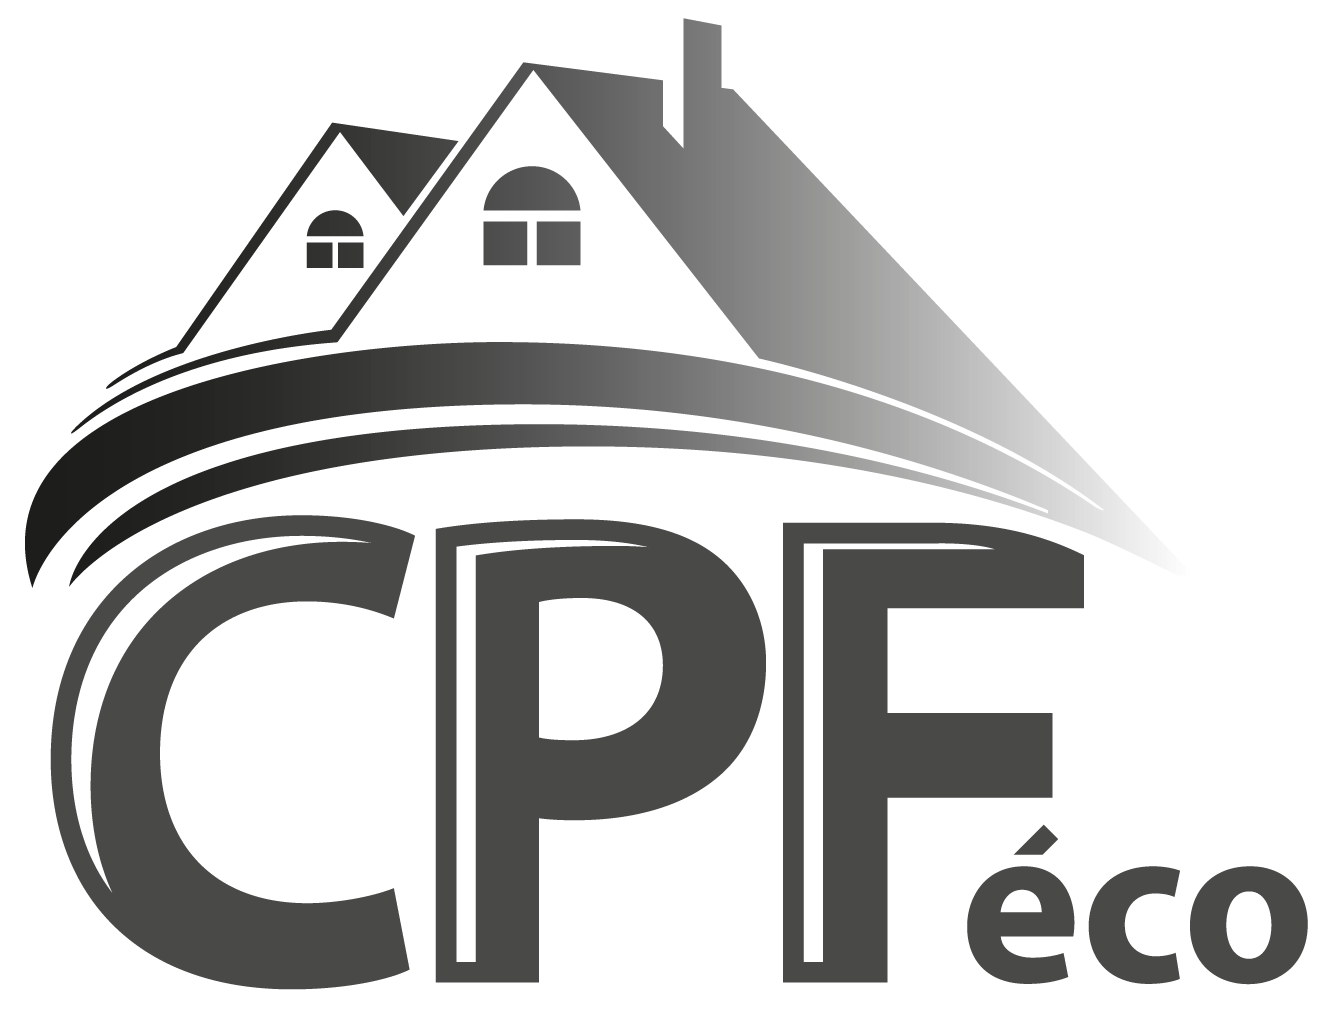 Contact | cpf-eco